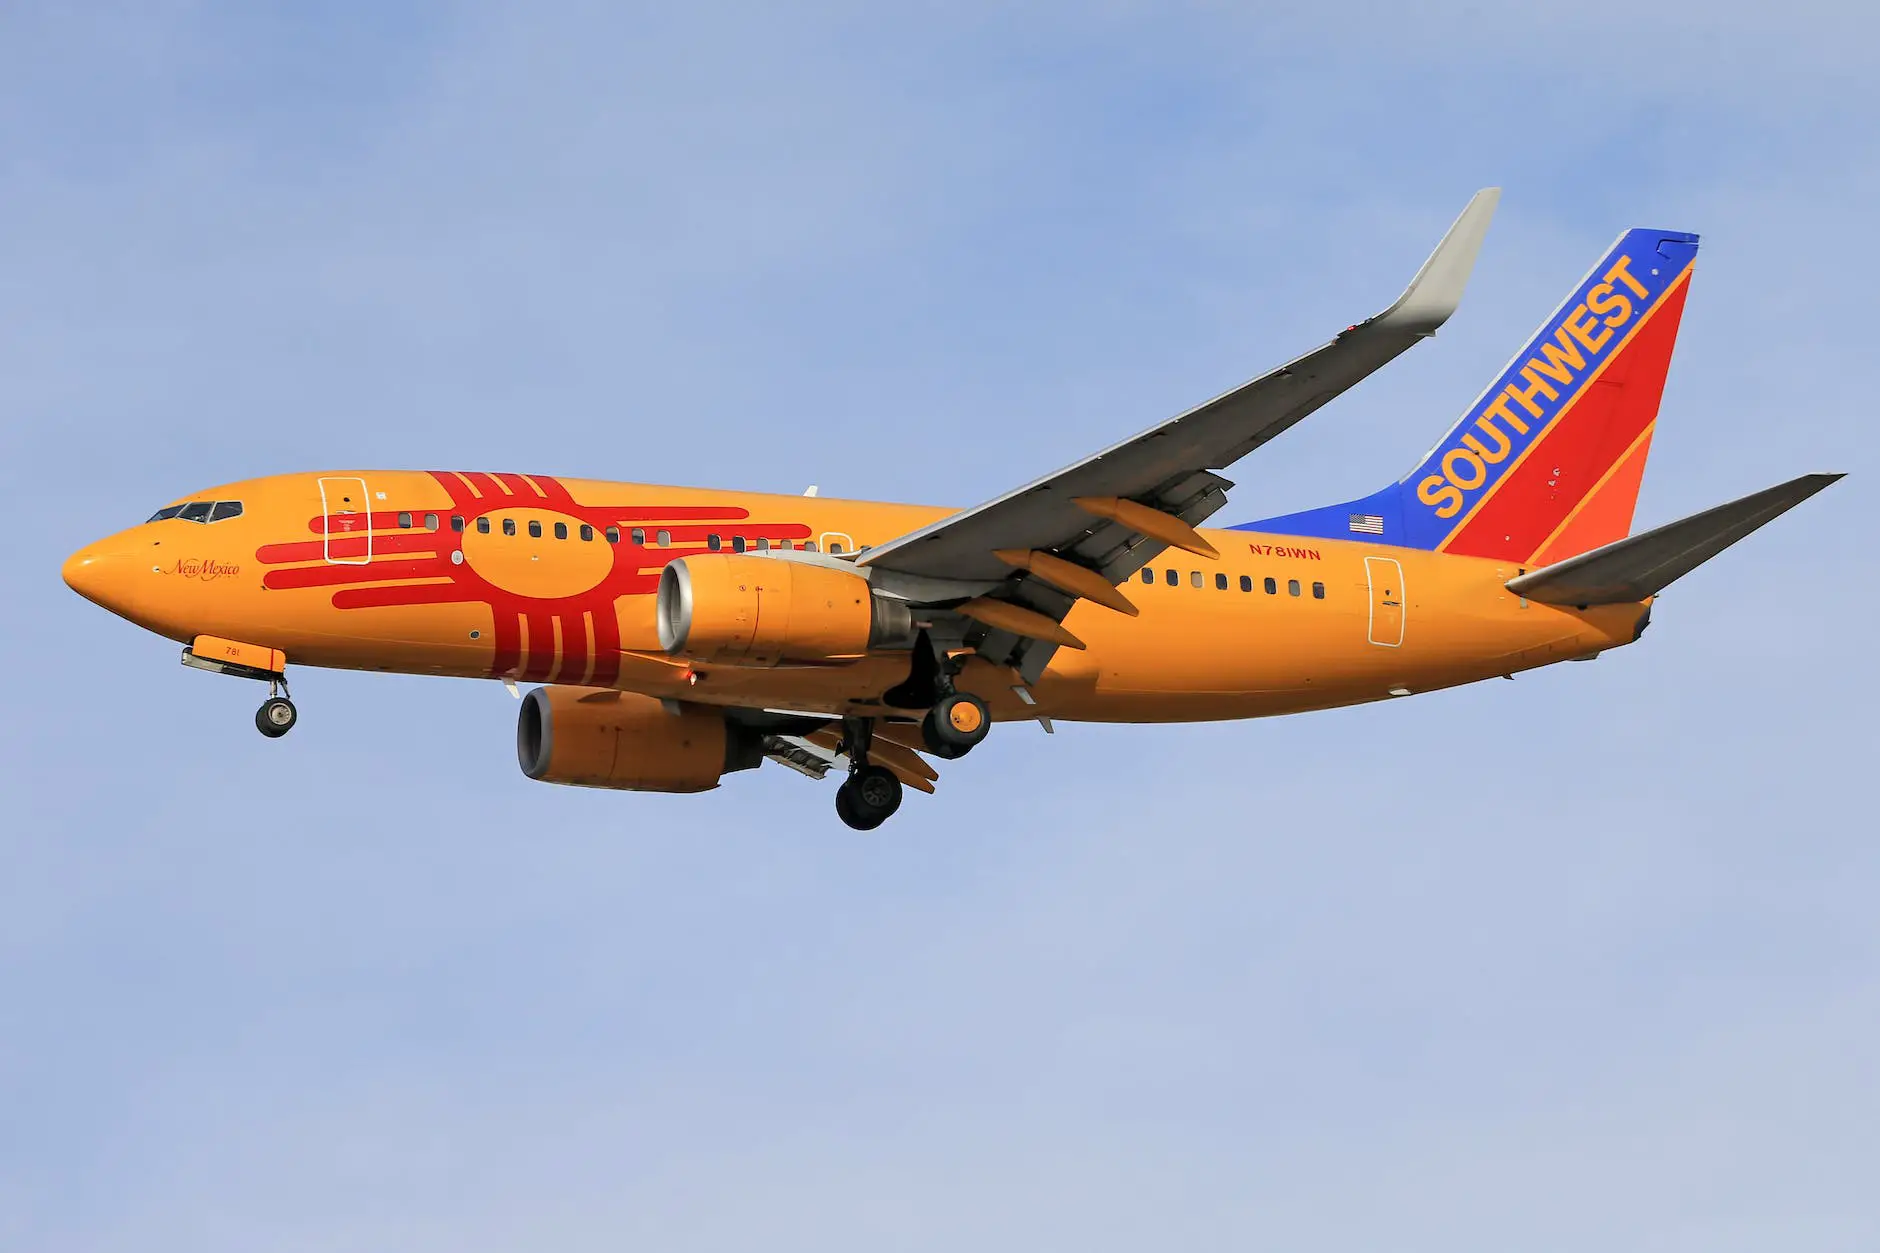 an orange passenger plane in the sky